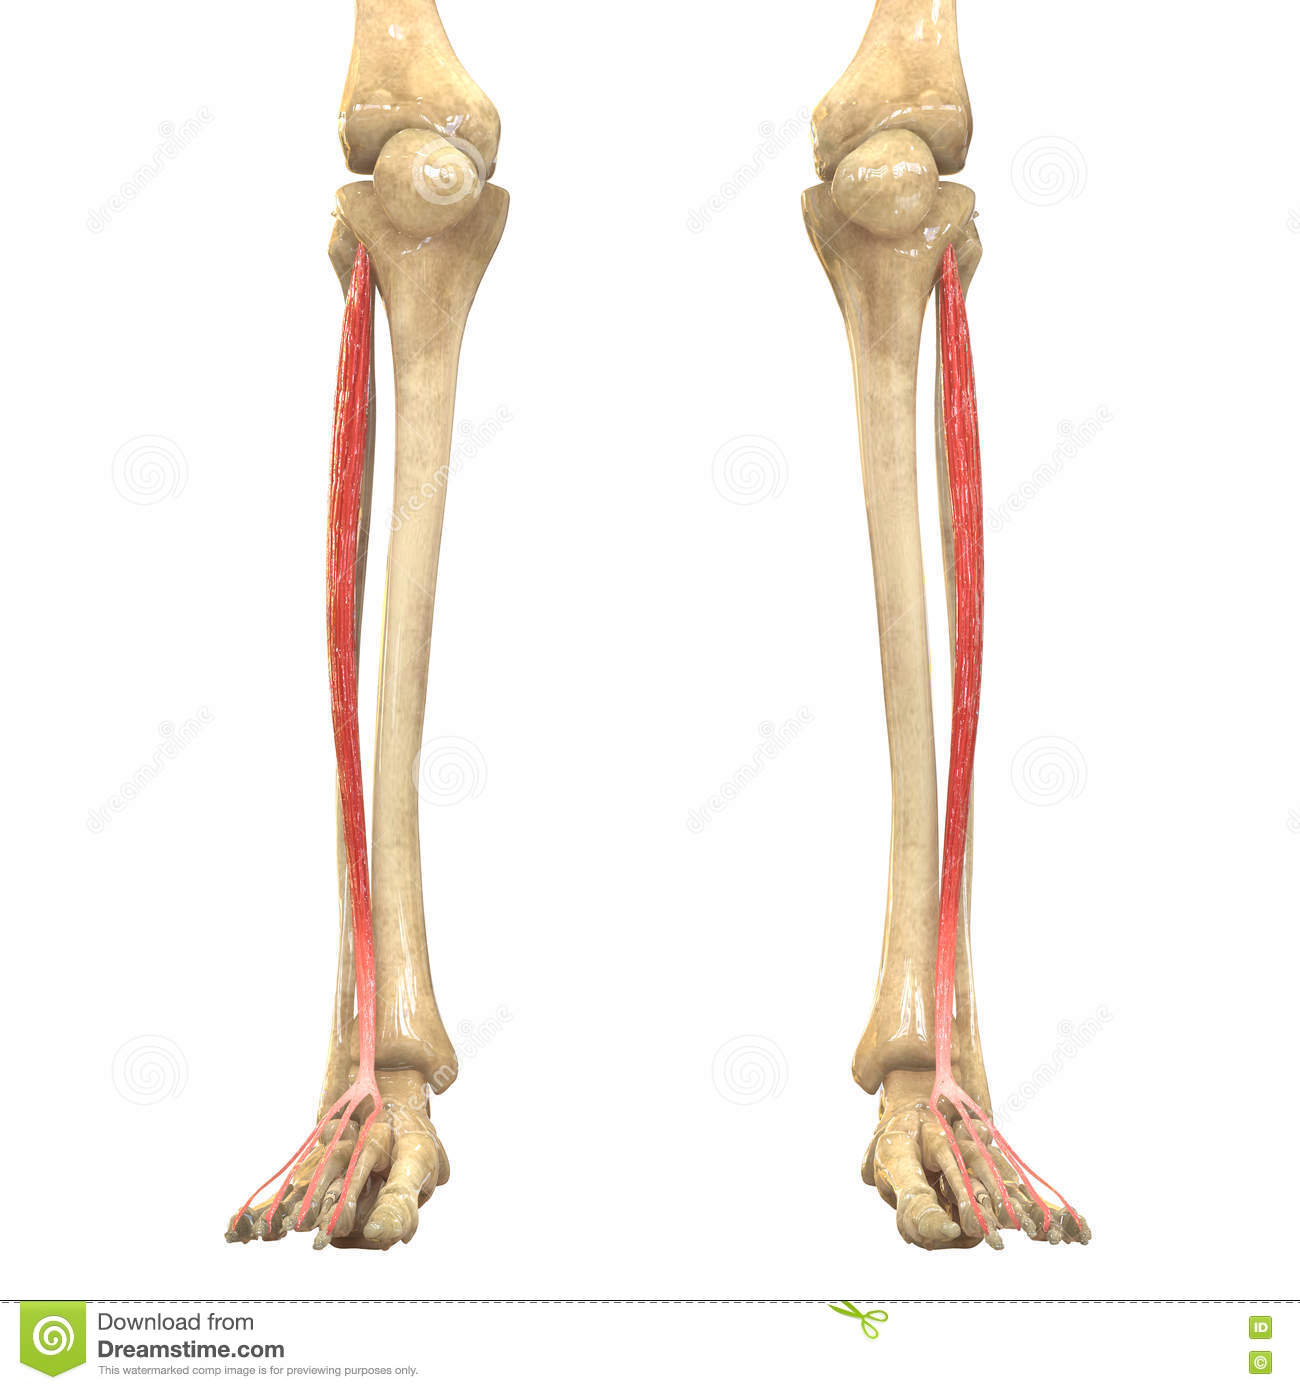 human-body-muscles-anatomy-extensor-digitorum-longus-d-illustration-75784856.jpg